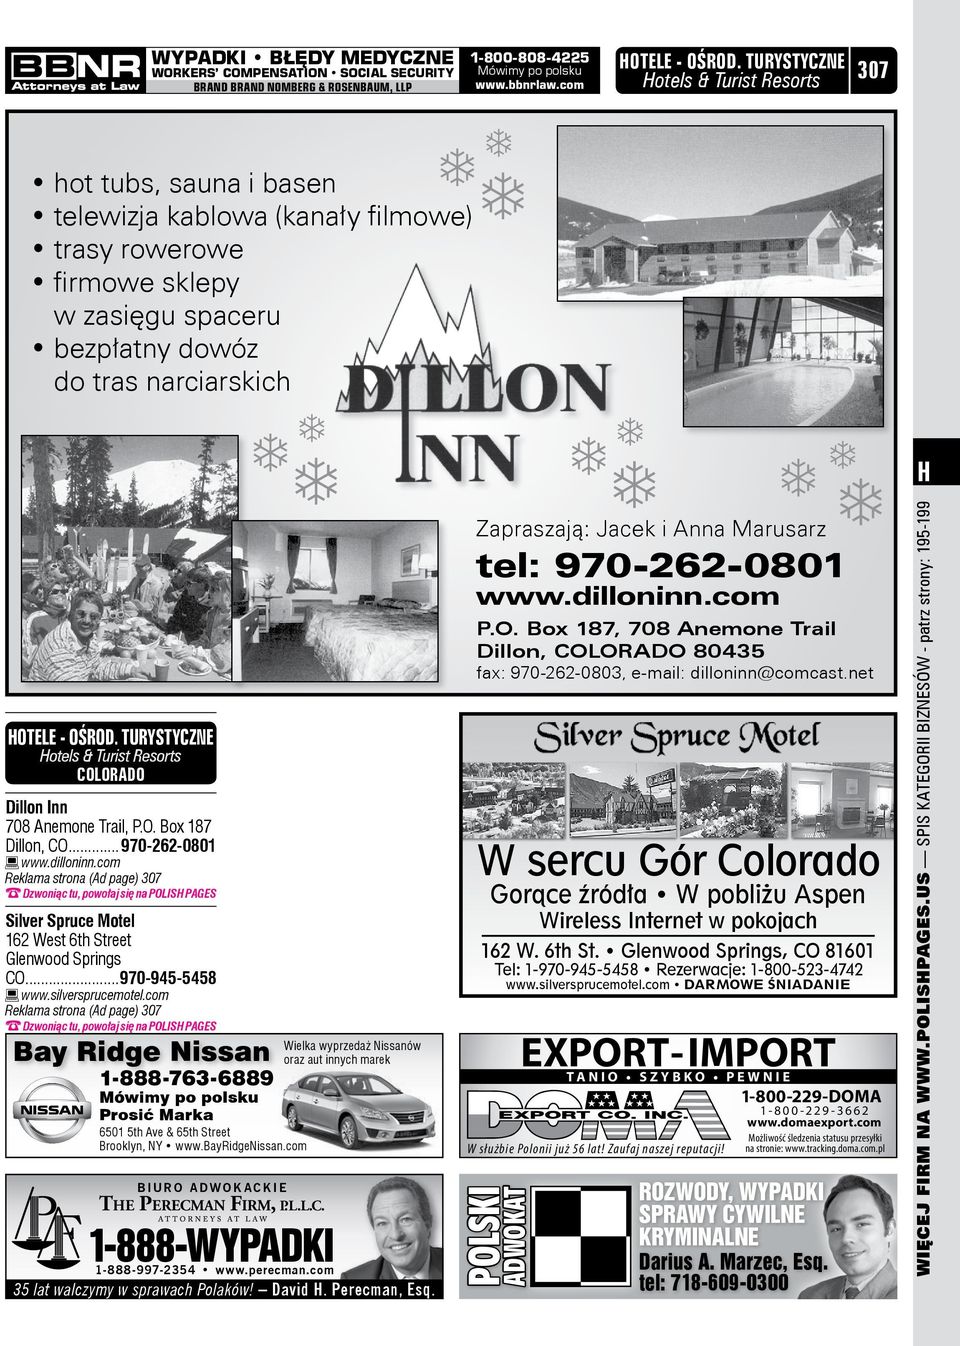 970-262-0801 www.dilloninn.com P.O. Box 187, 708 Anemone Trail Dillon, COLORADO 80435 fax: 970-262-0803, e-mail: dilloninn@comcast.net Hotele - OŚROD.